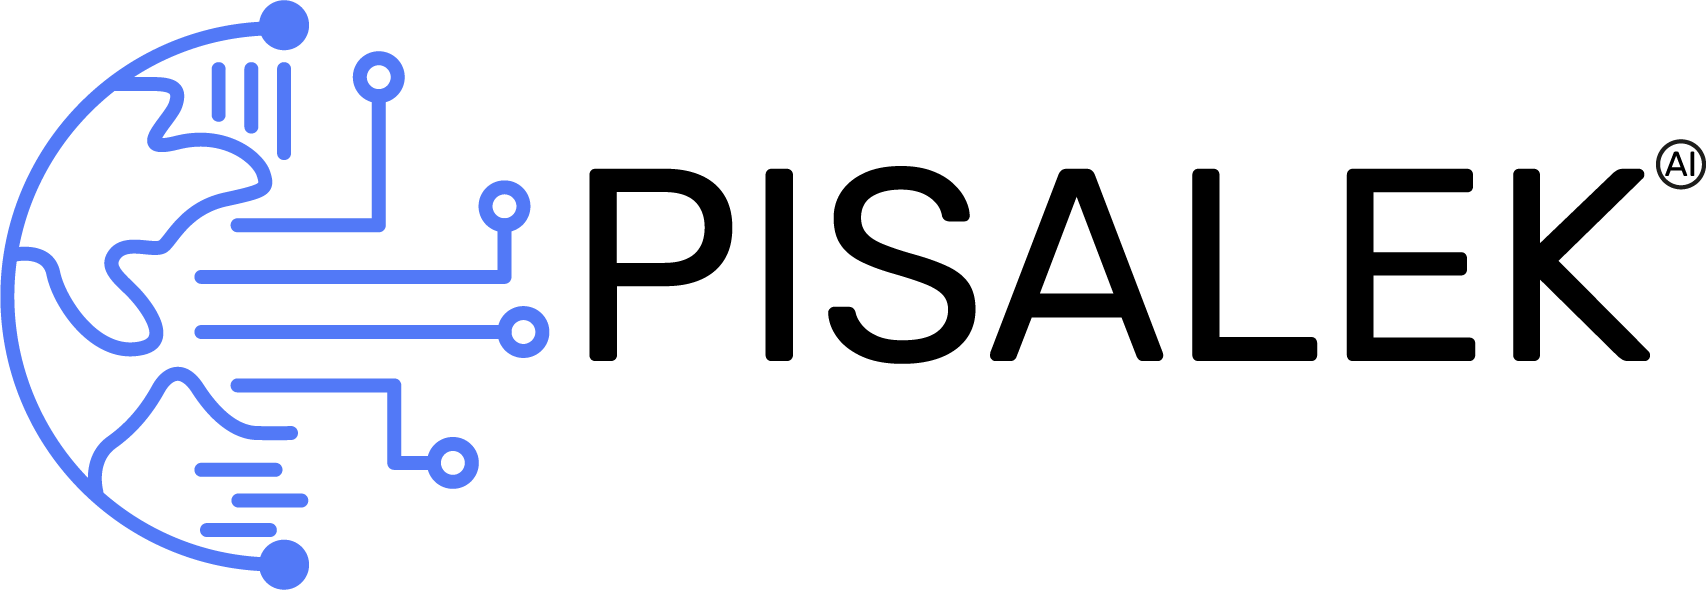 palestra-footer-logo